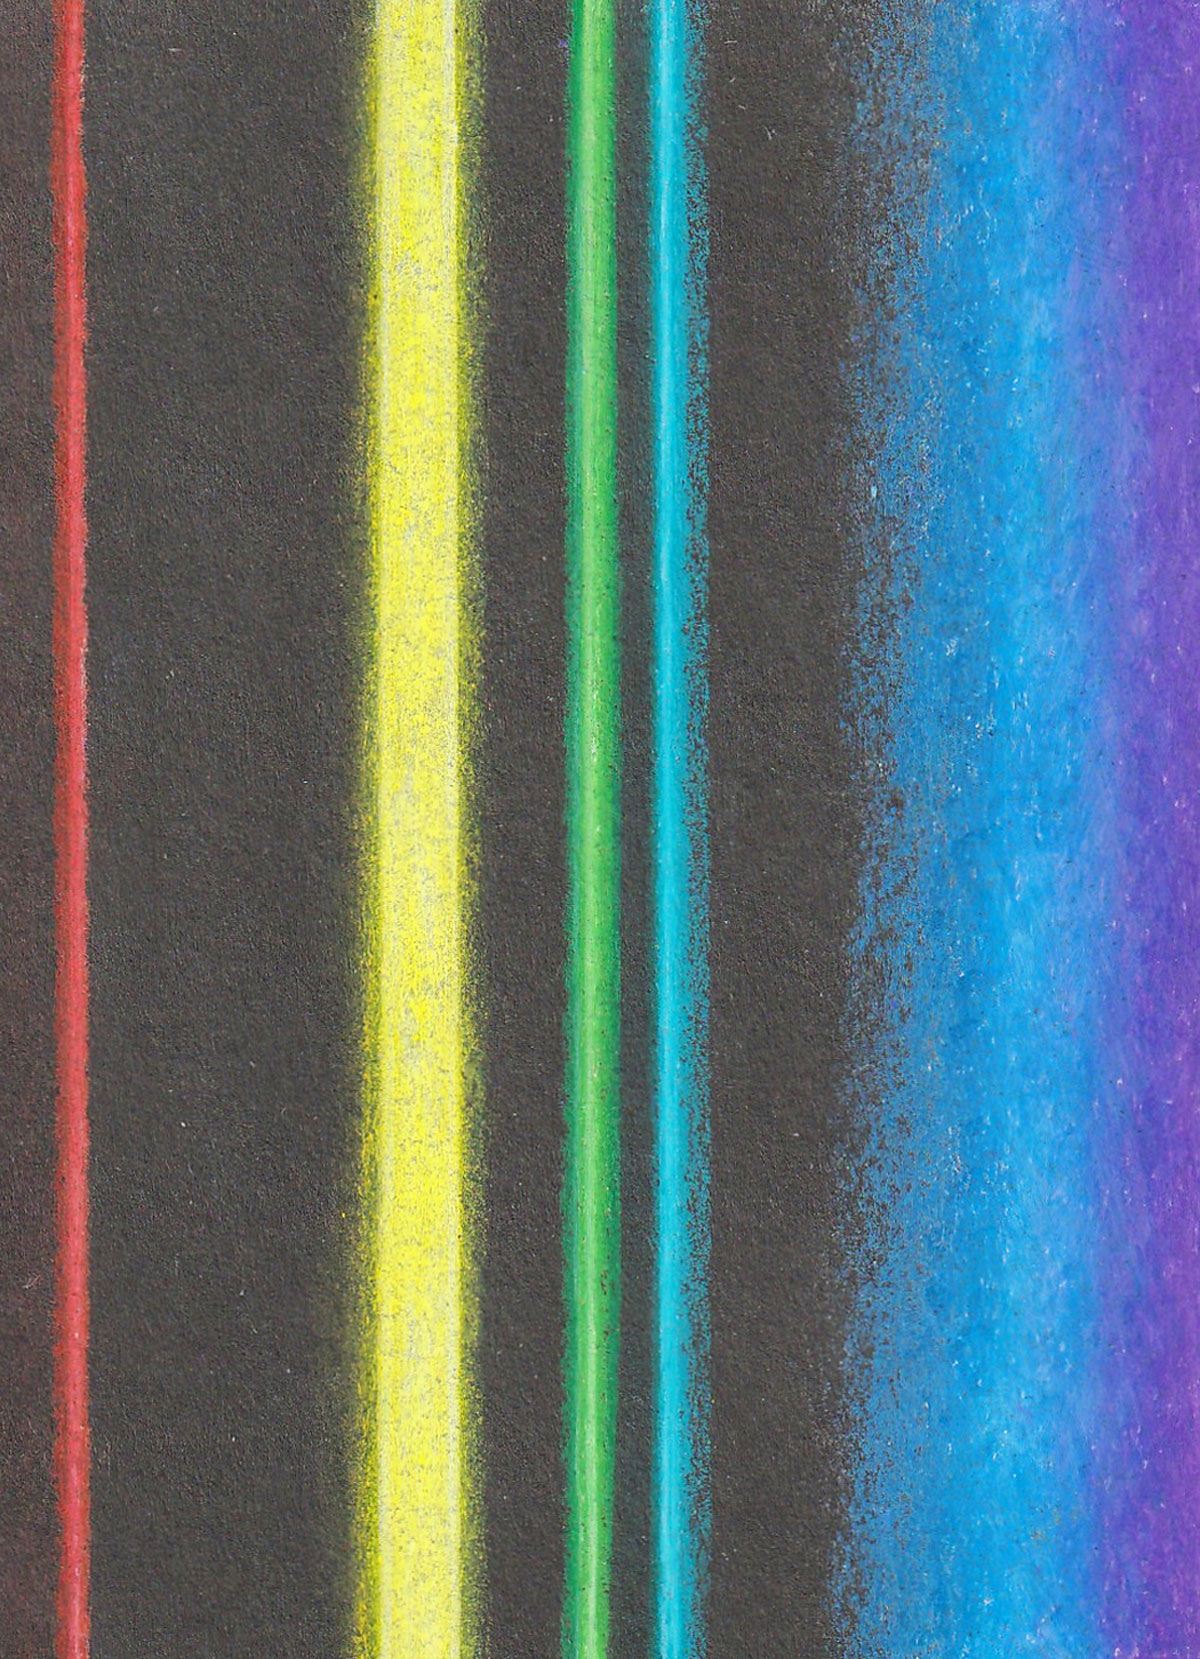 Picture for Mona Lisa Emission Spectrum